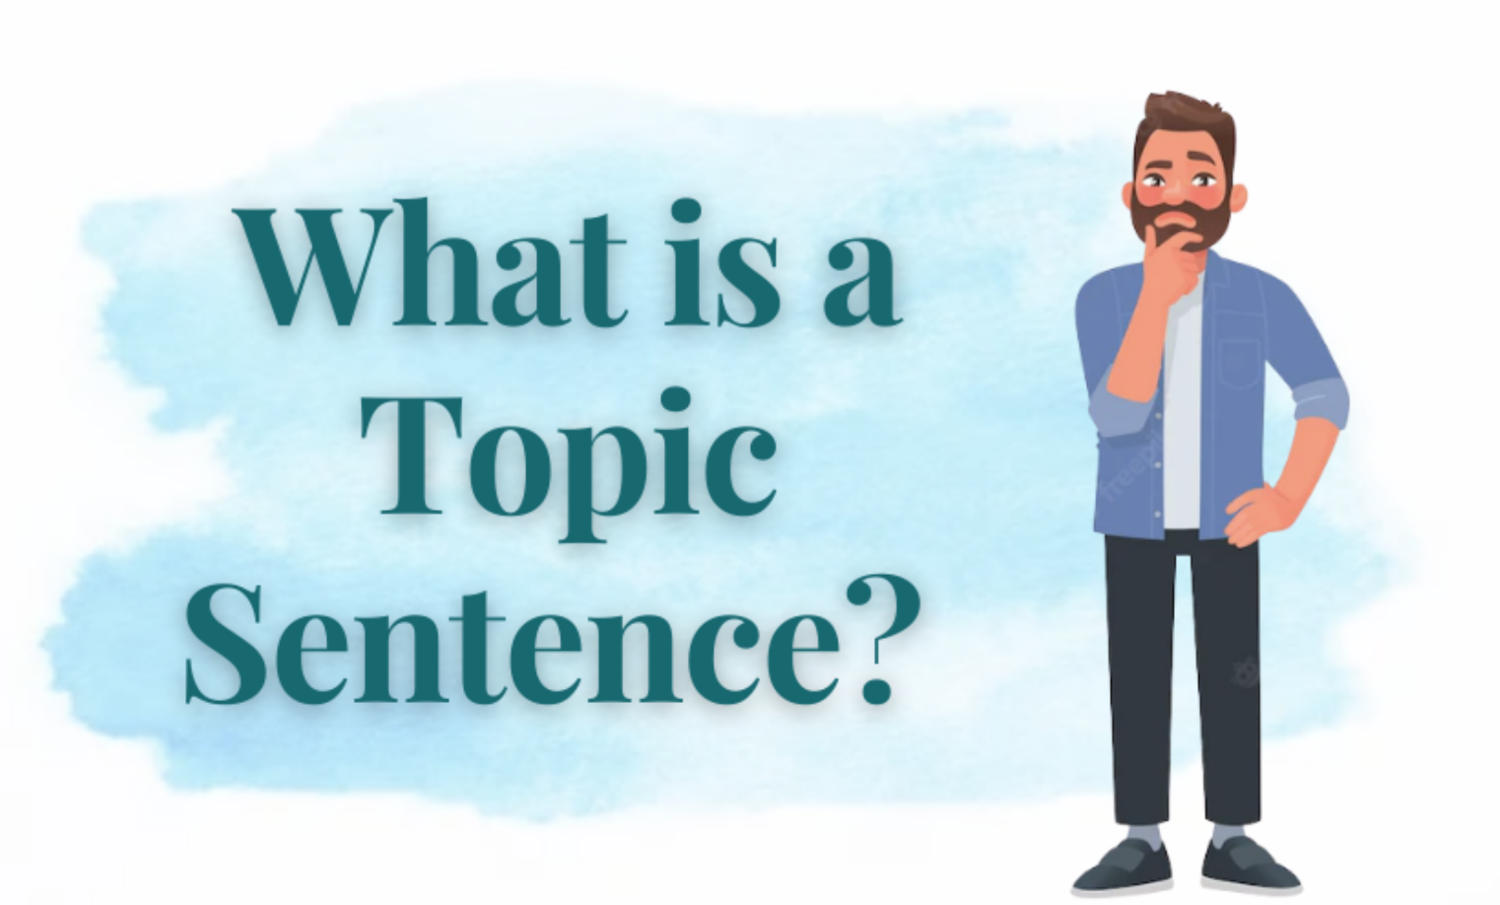 topic sentences